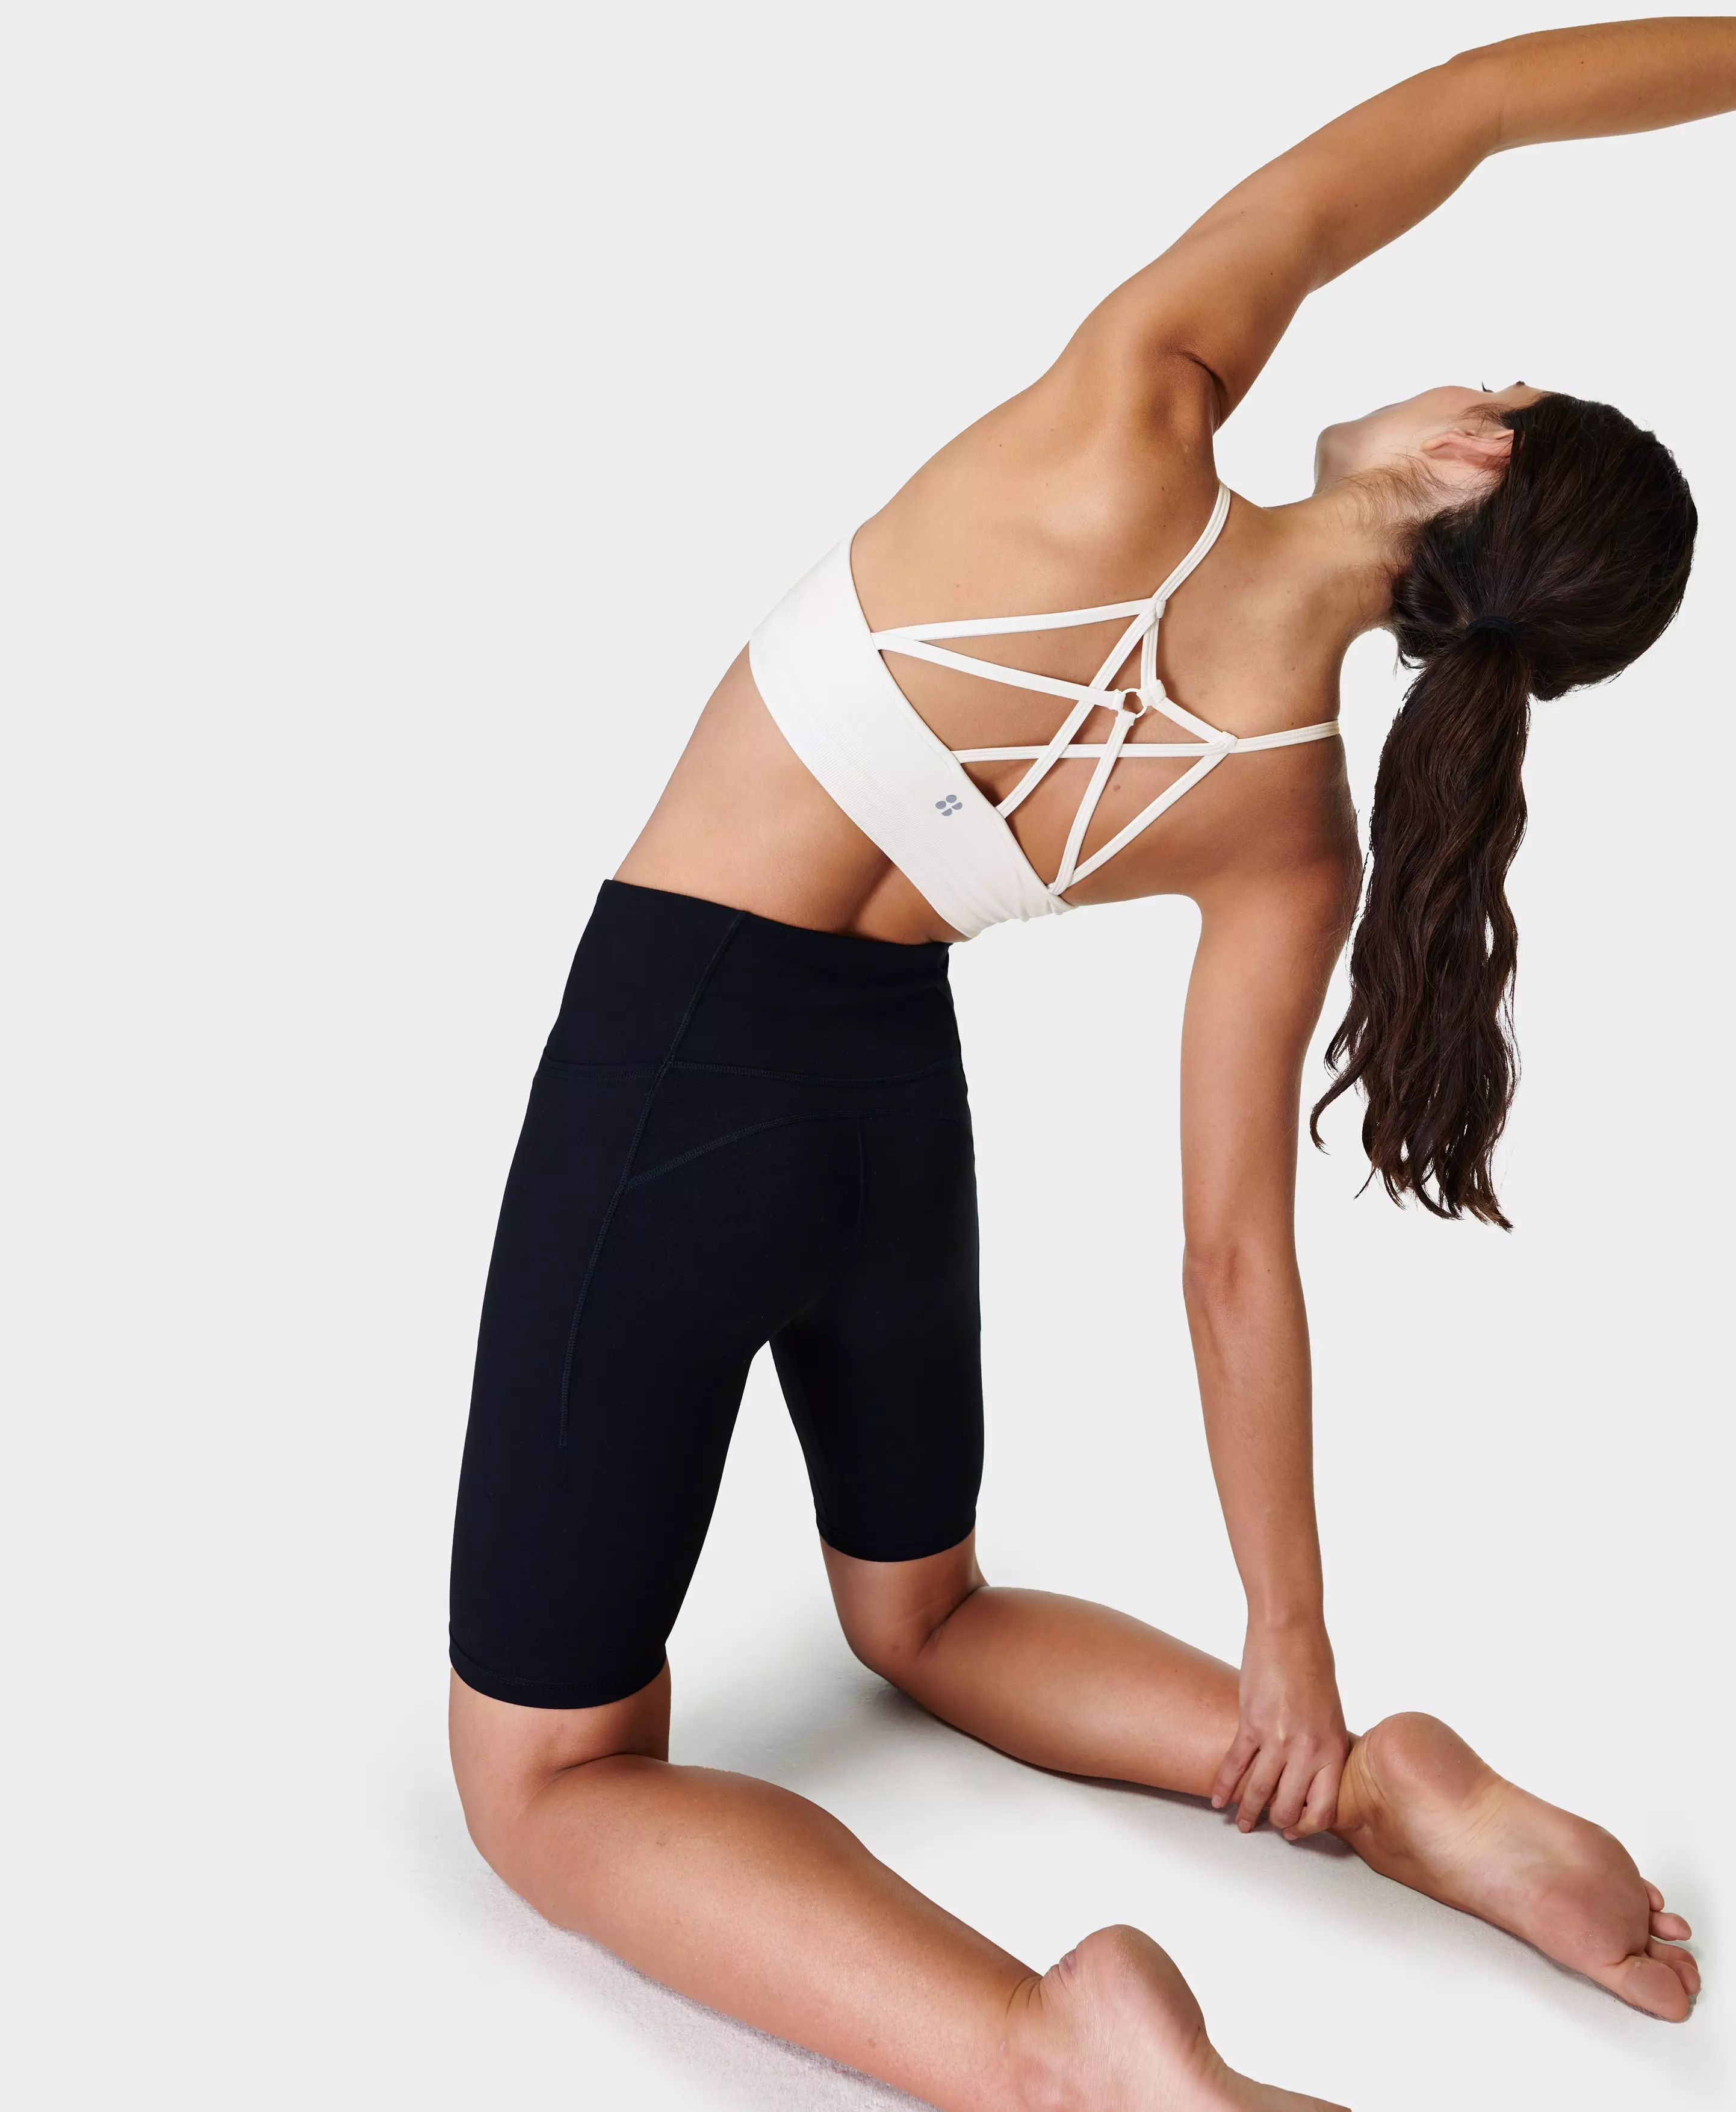 Spirit Reformed Yoga Bra - White, Women's Sports Bras